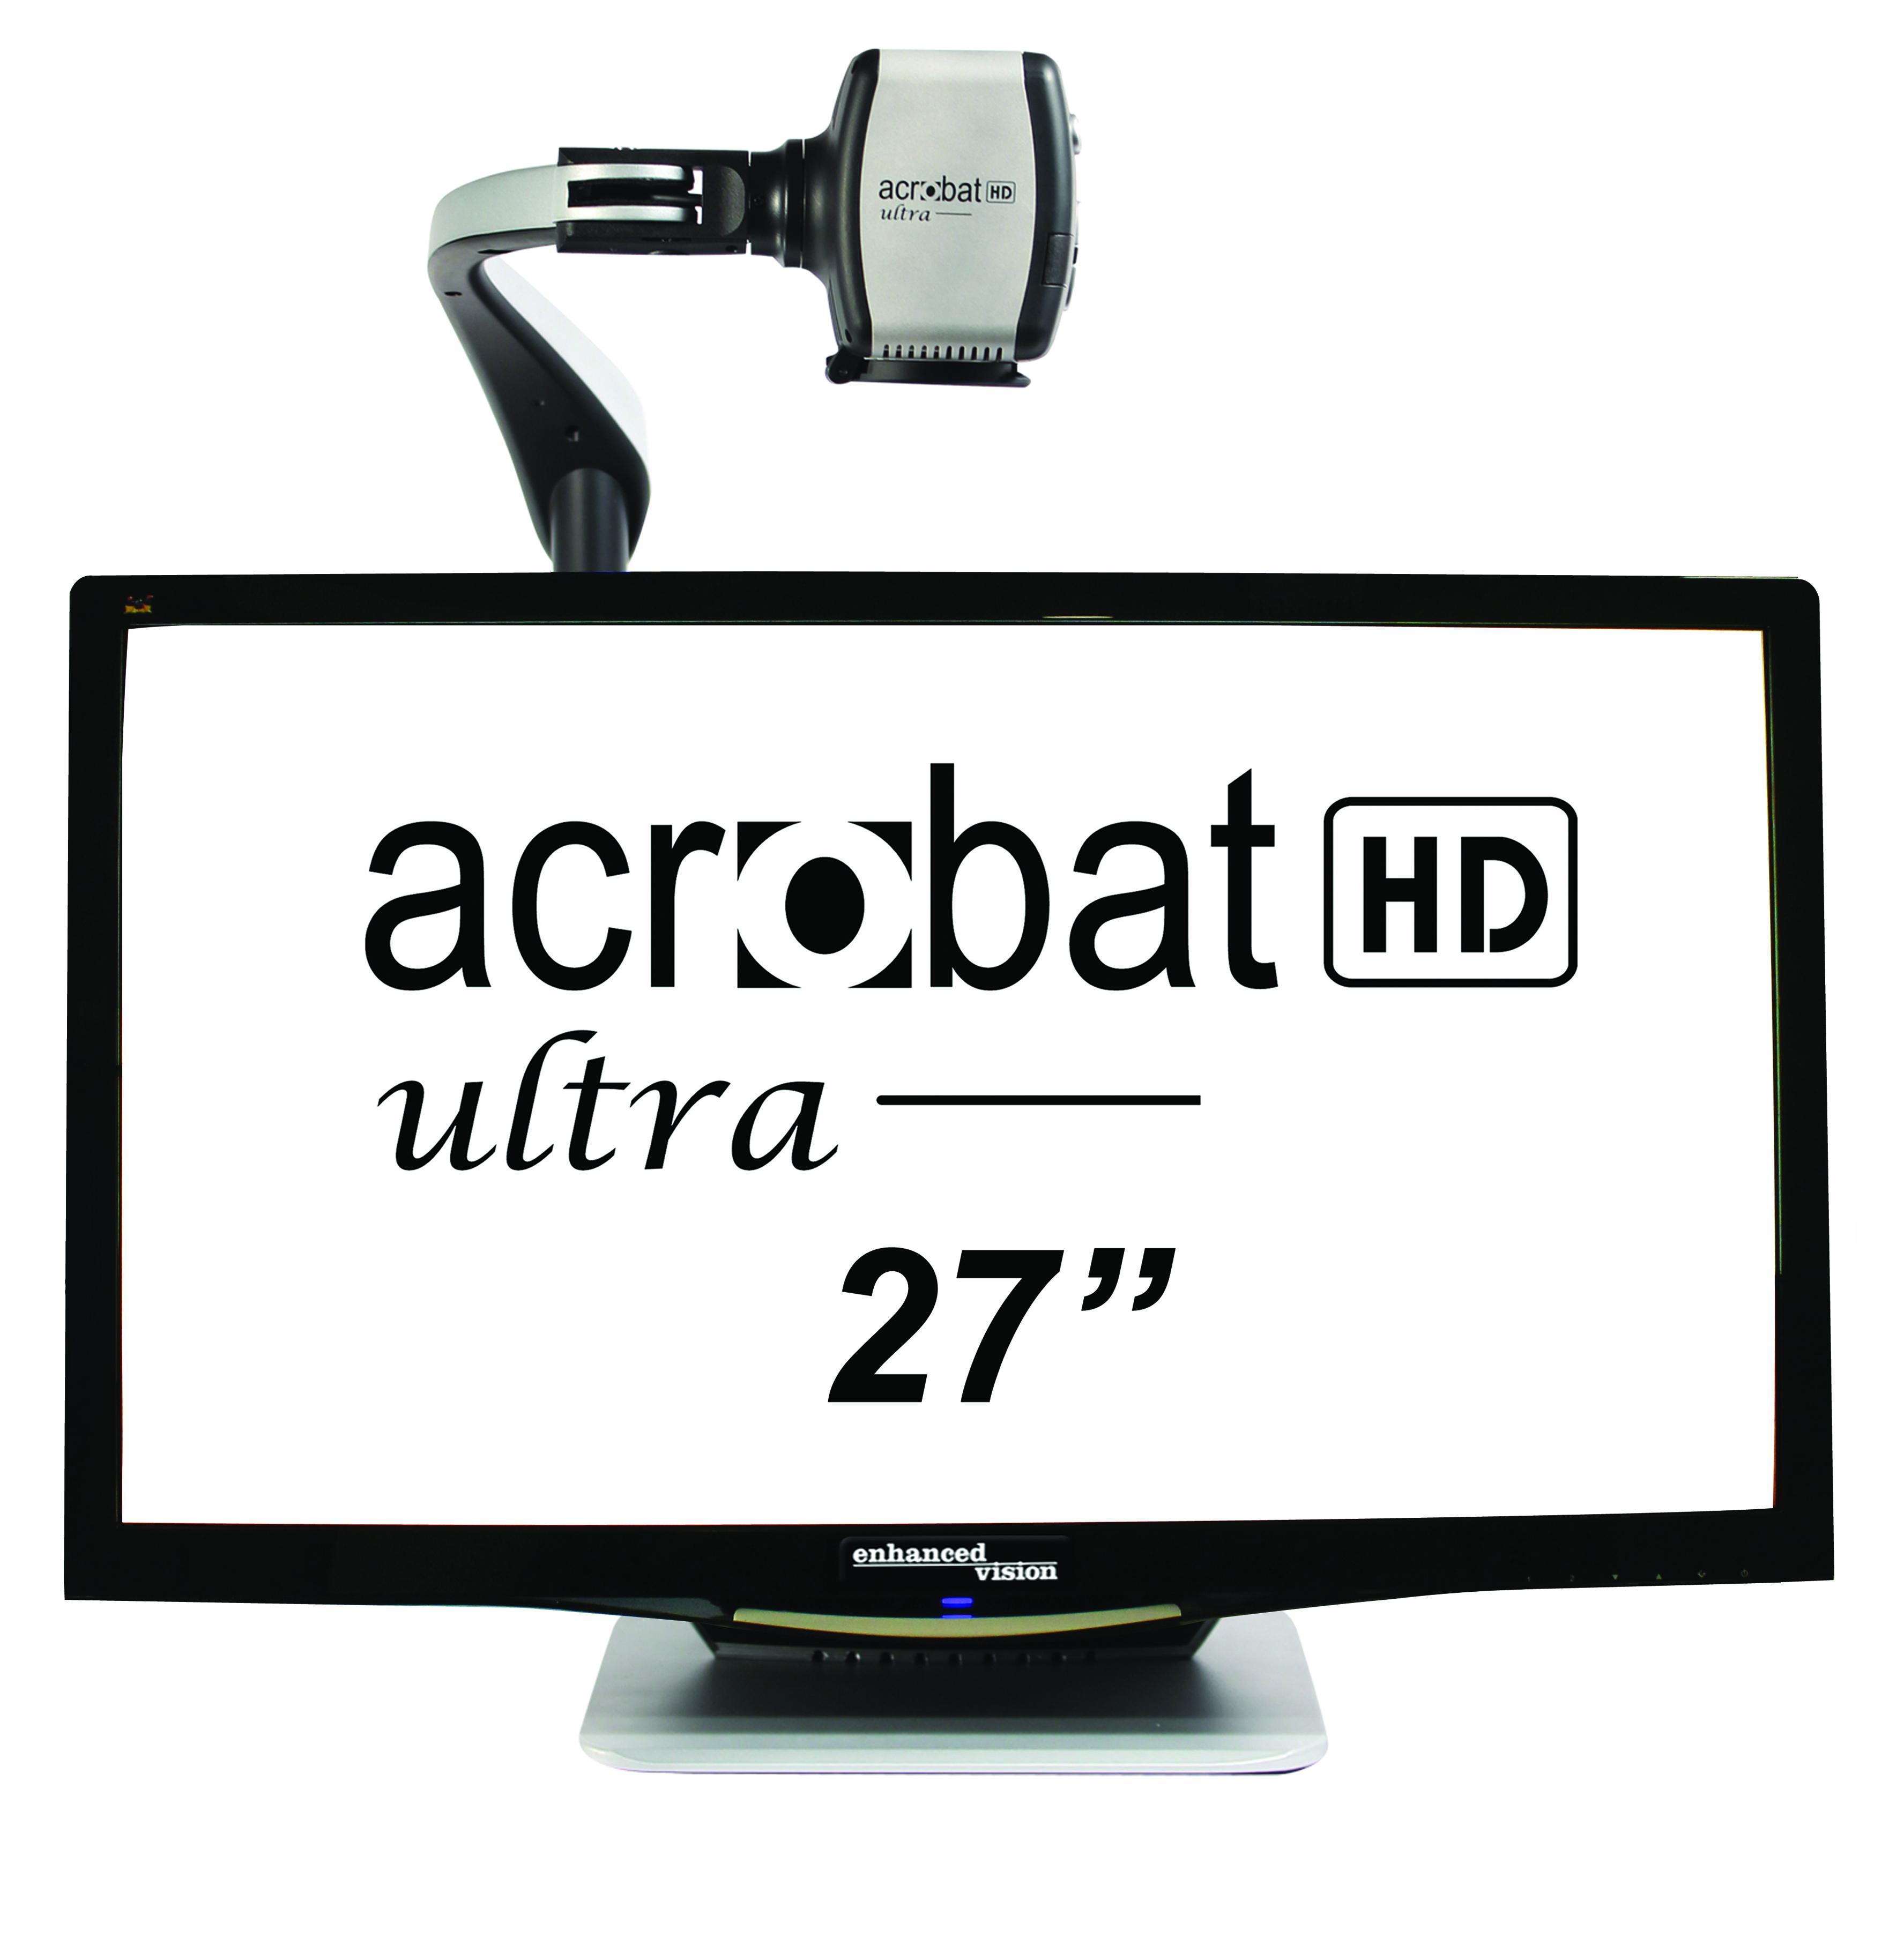 Acrobat HD ultra LCD